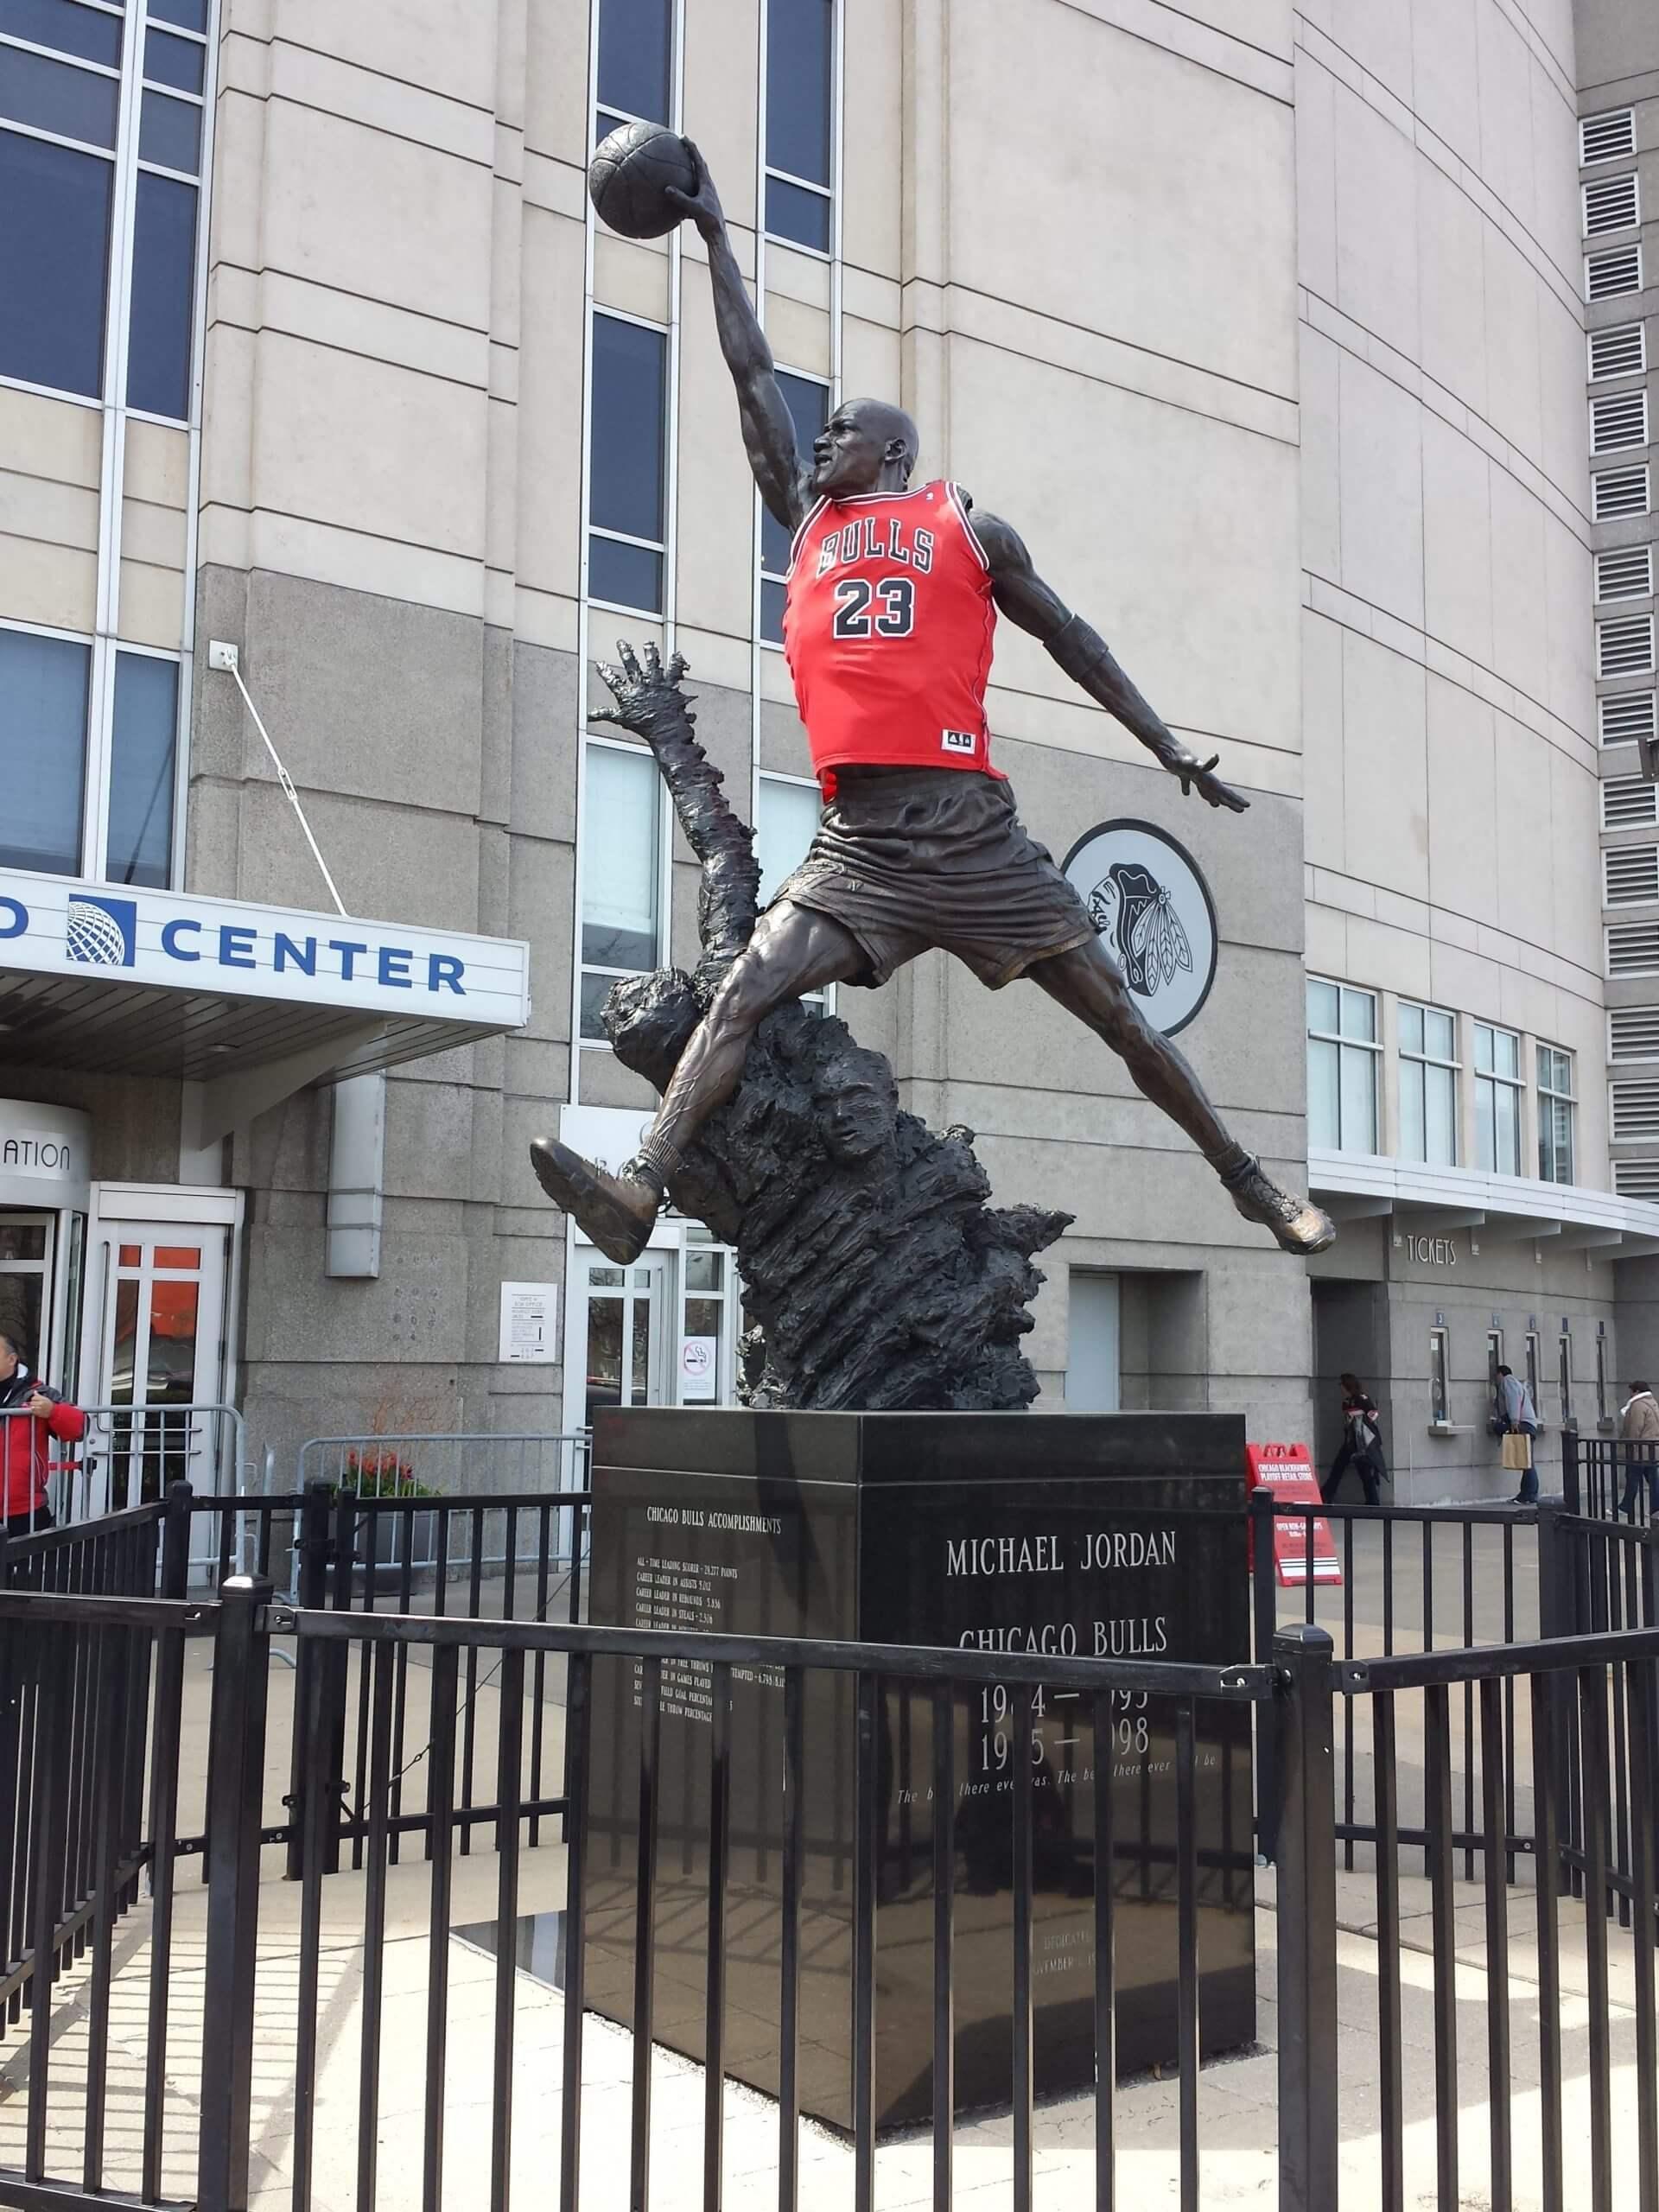 Statue of Michael Jordan in a Bulls jersey outside of a basketball stadium